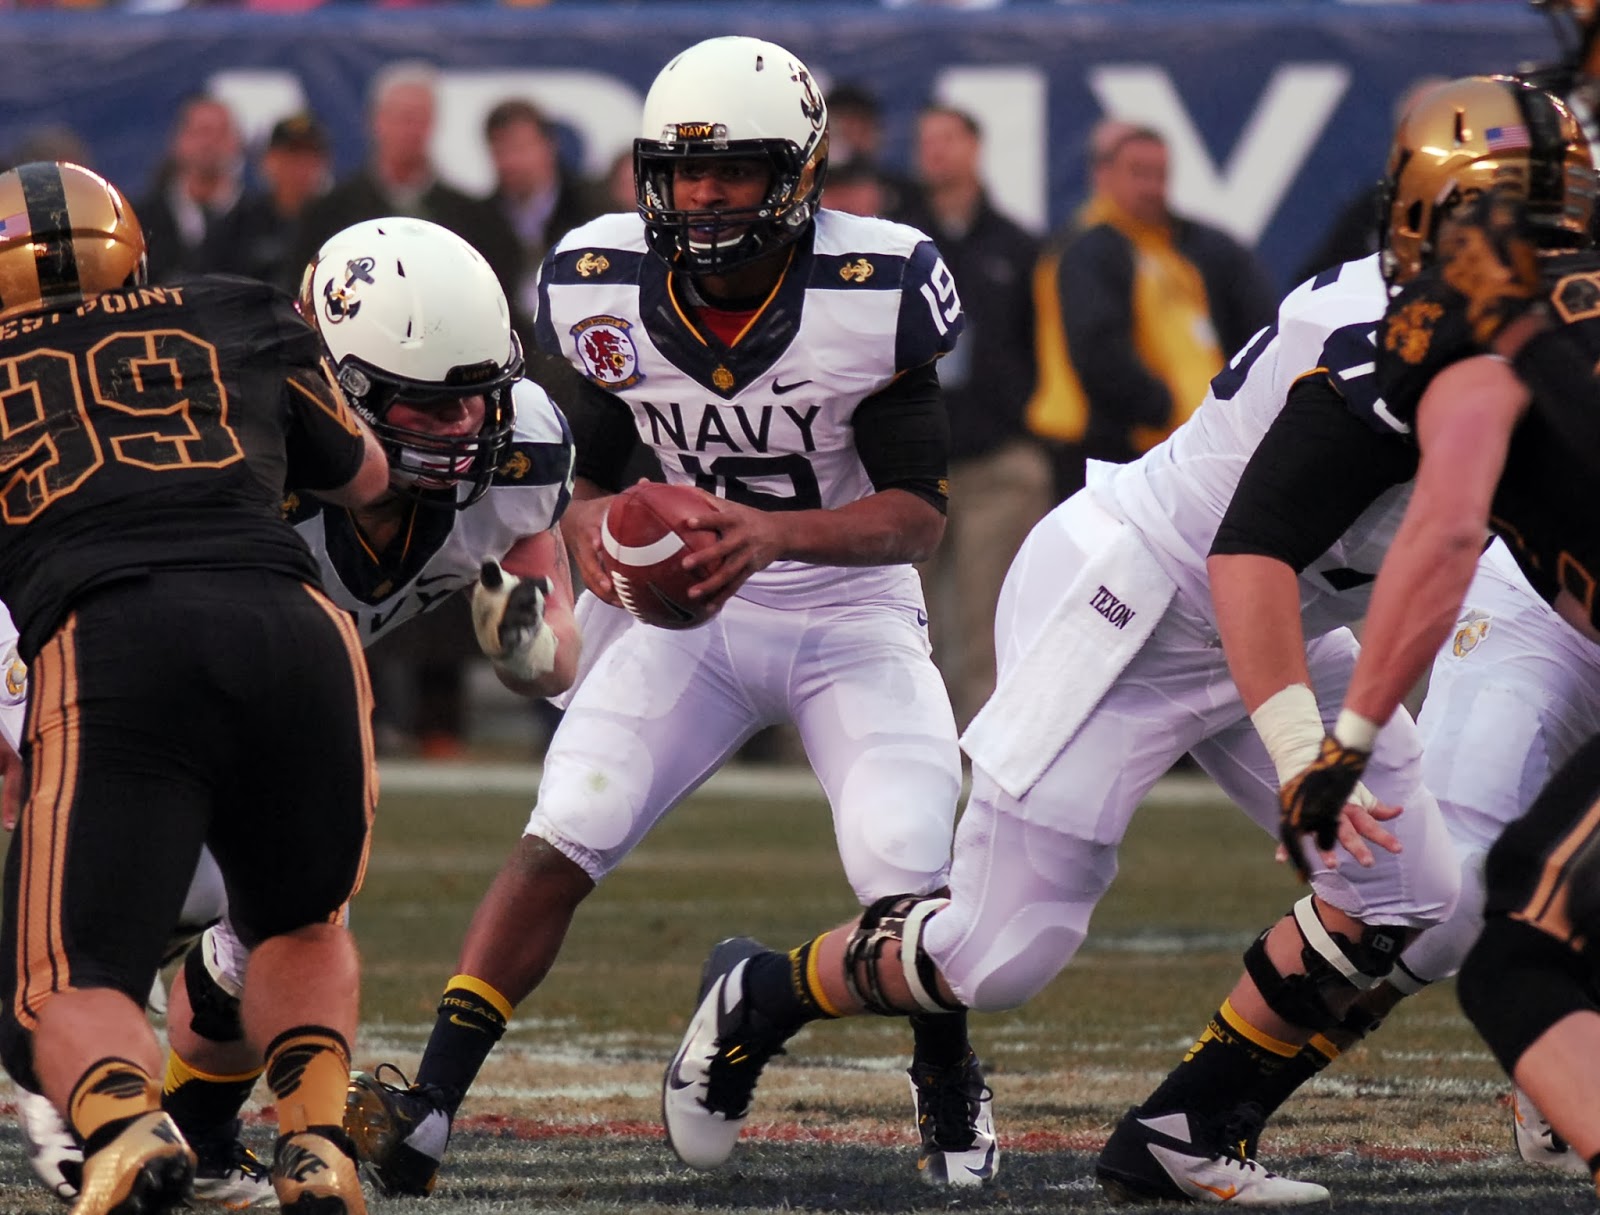 U.S. Naval Academy Football by Chad Runge